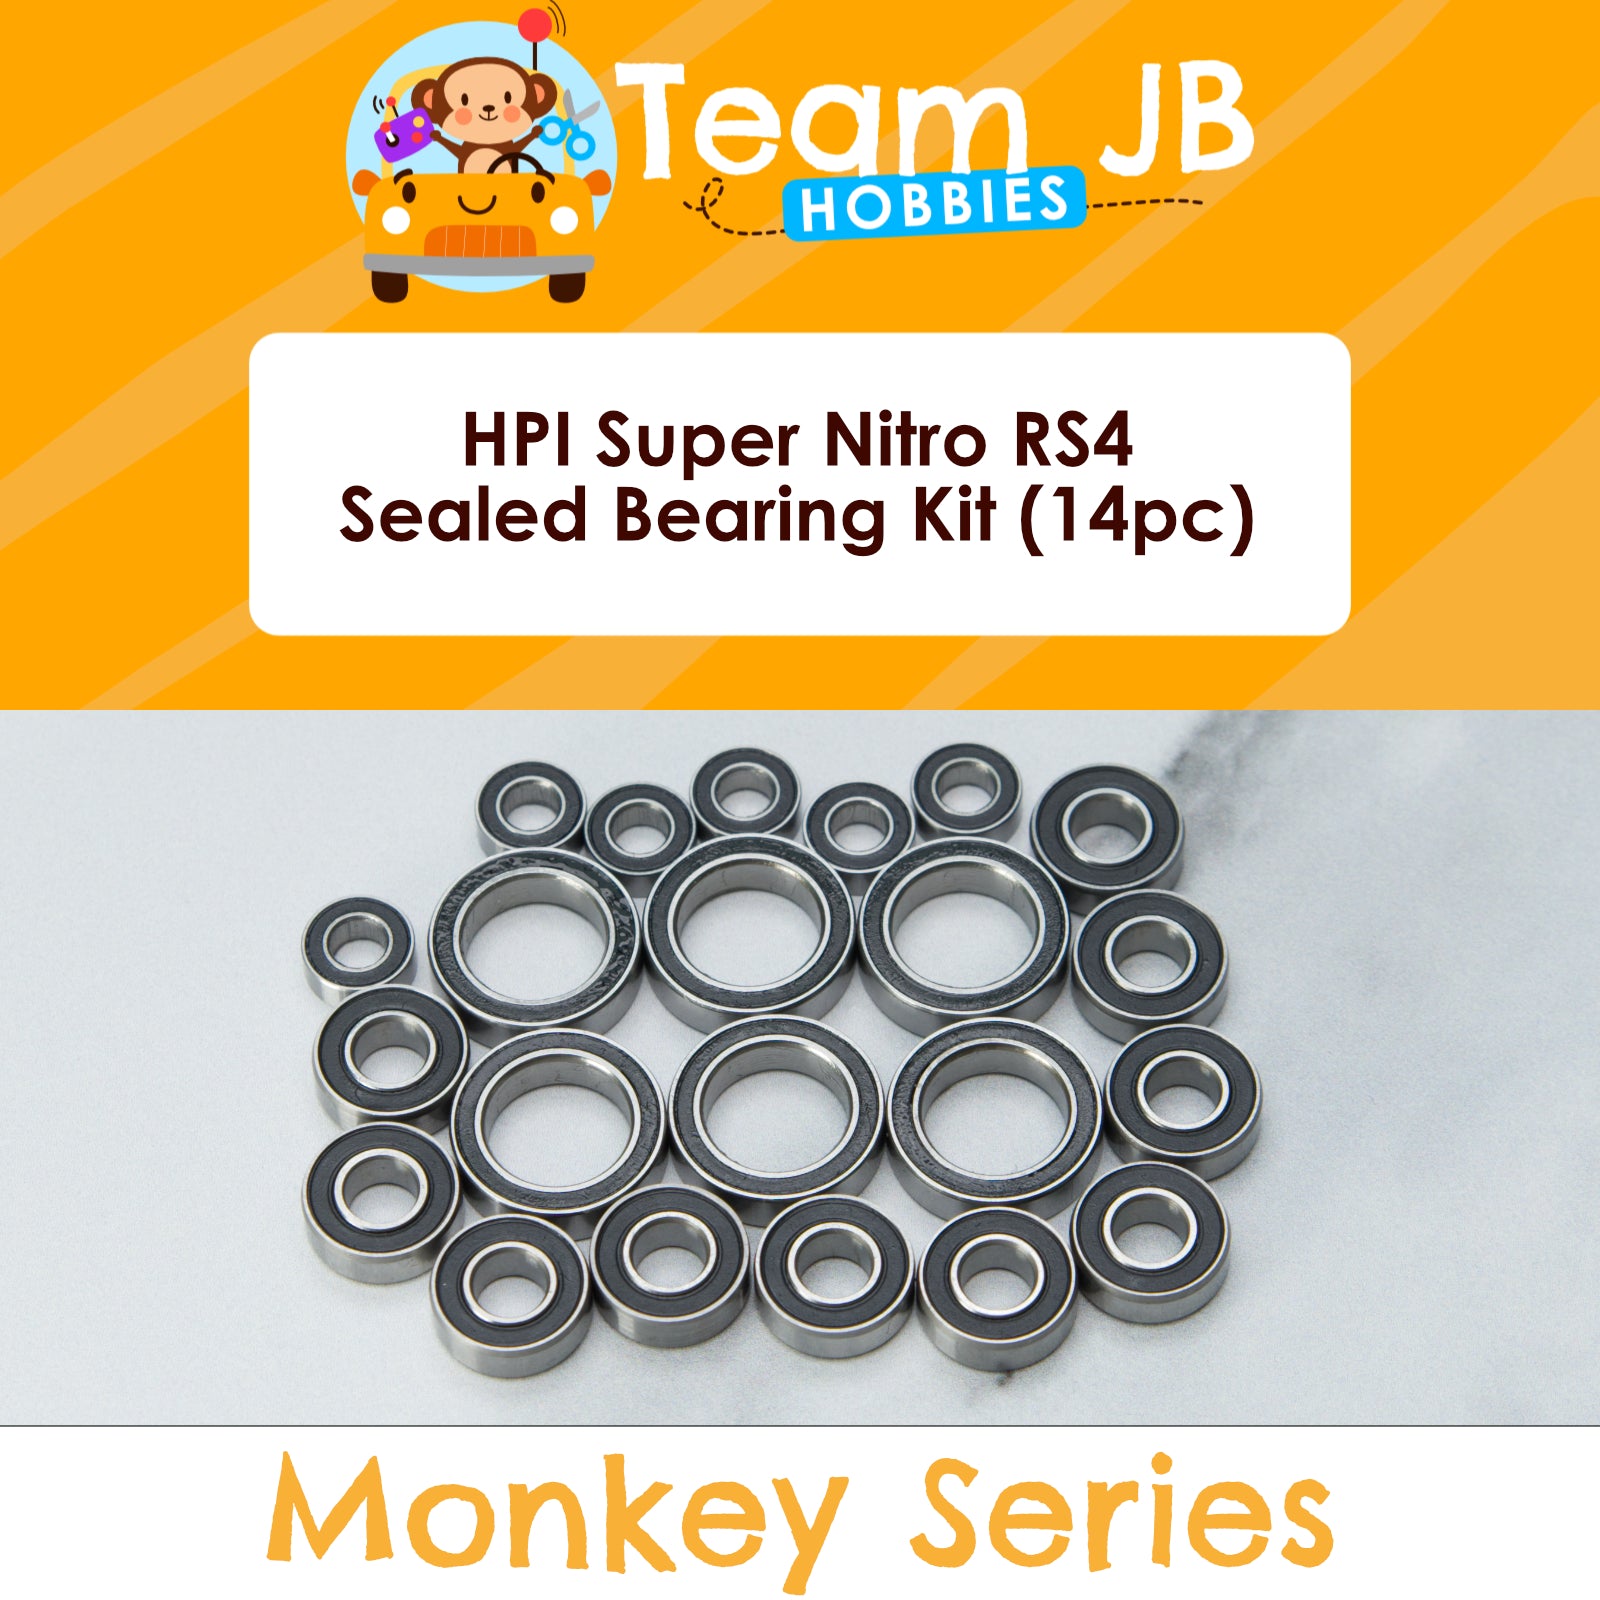 HPI Super Nitro RS4 - Sealed Bearing Kit